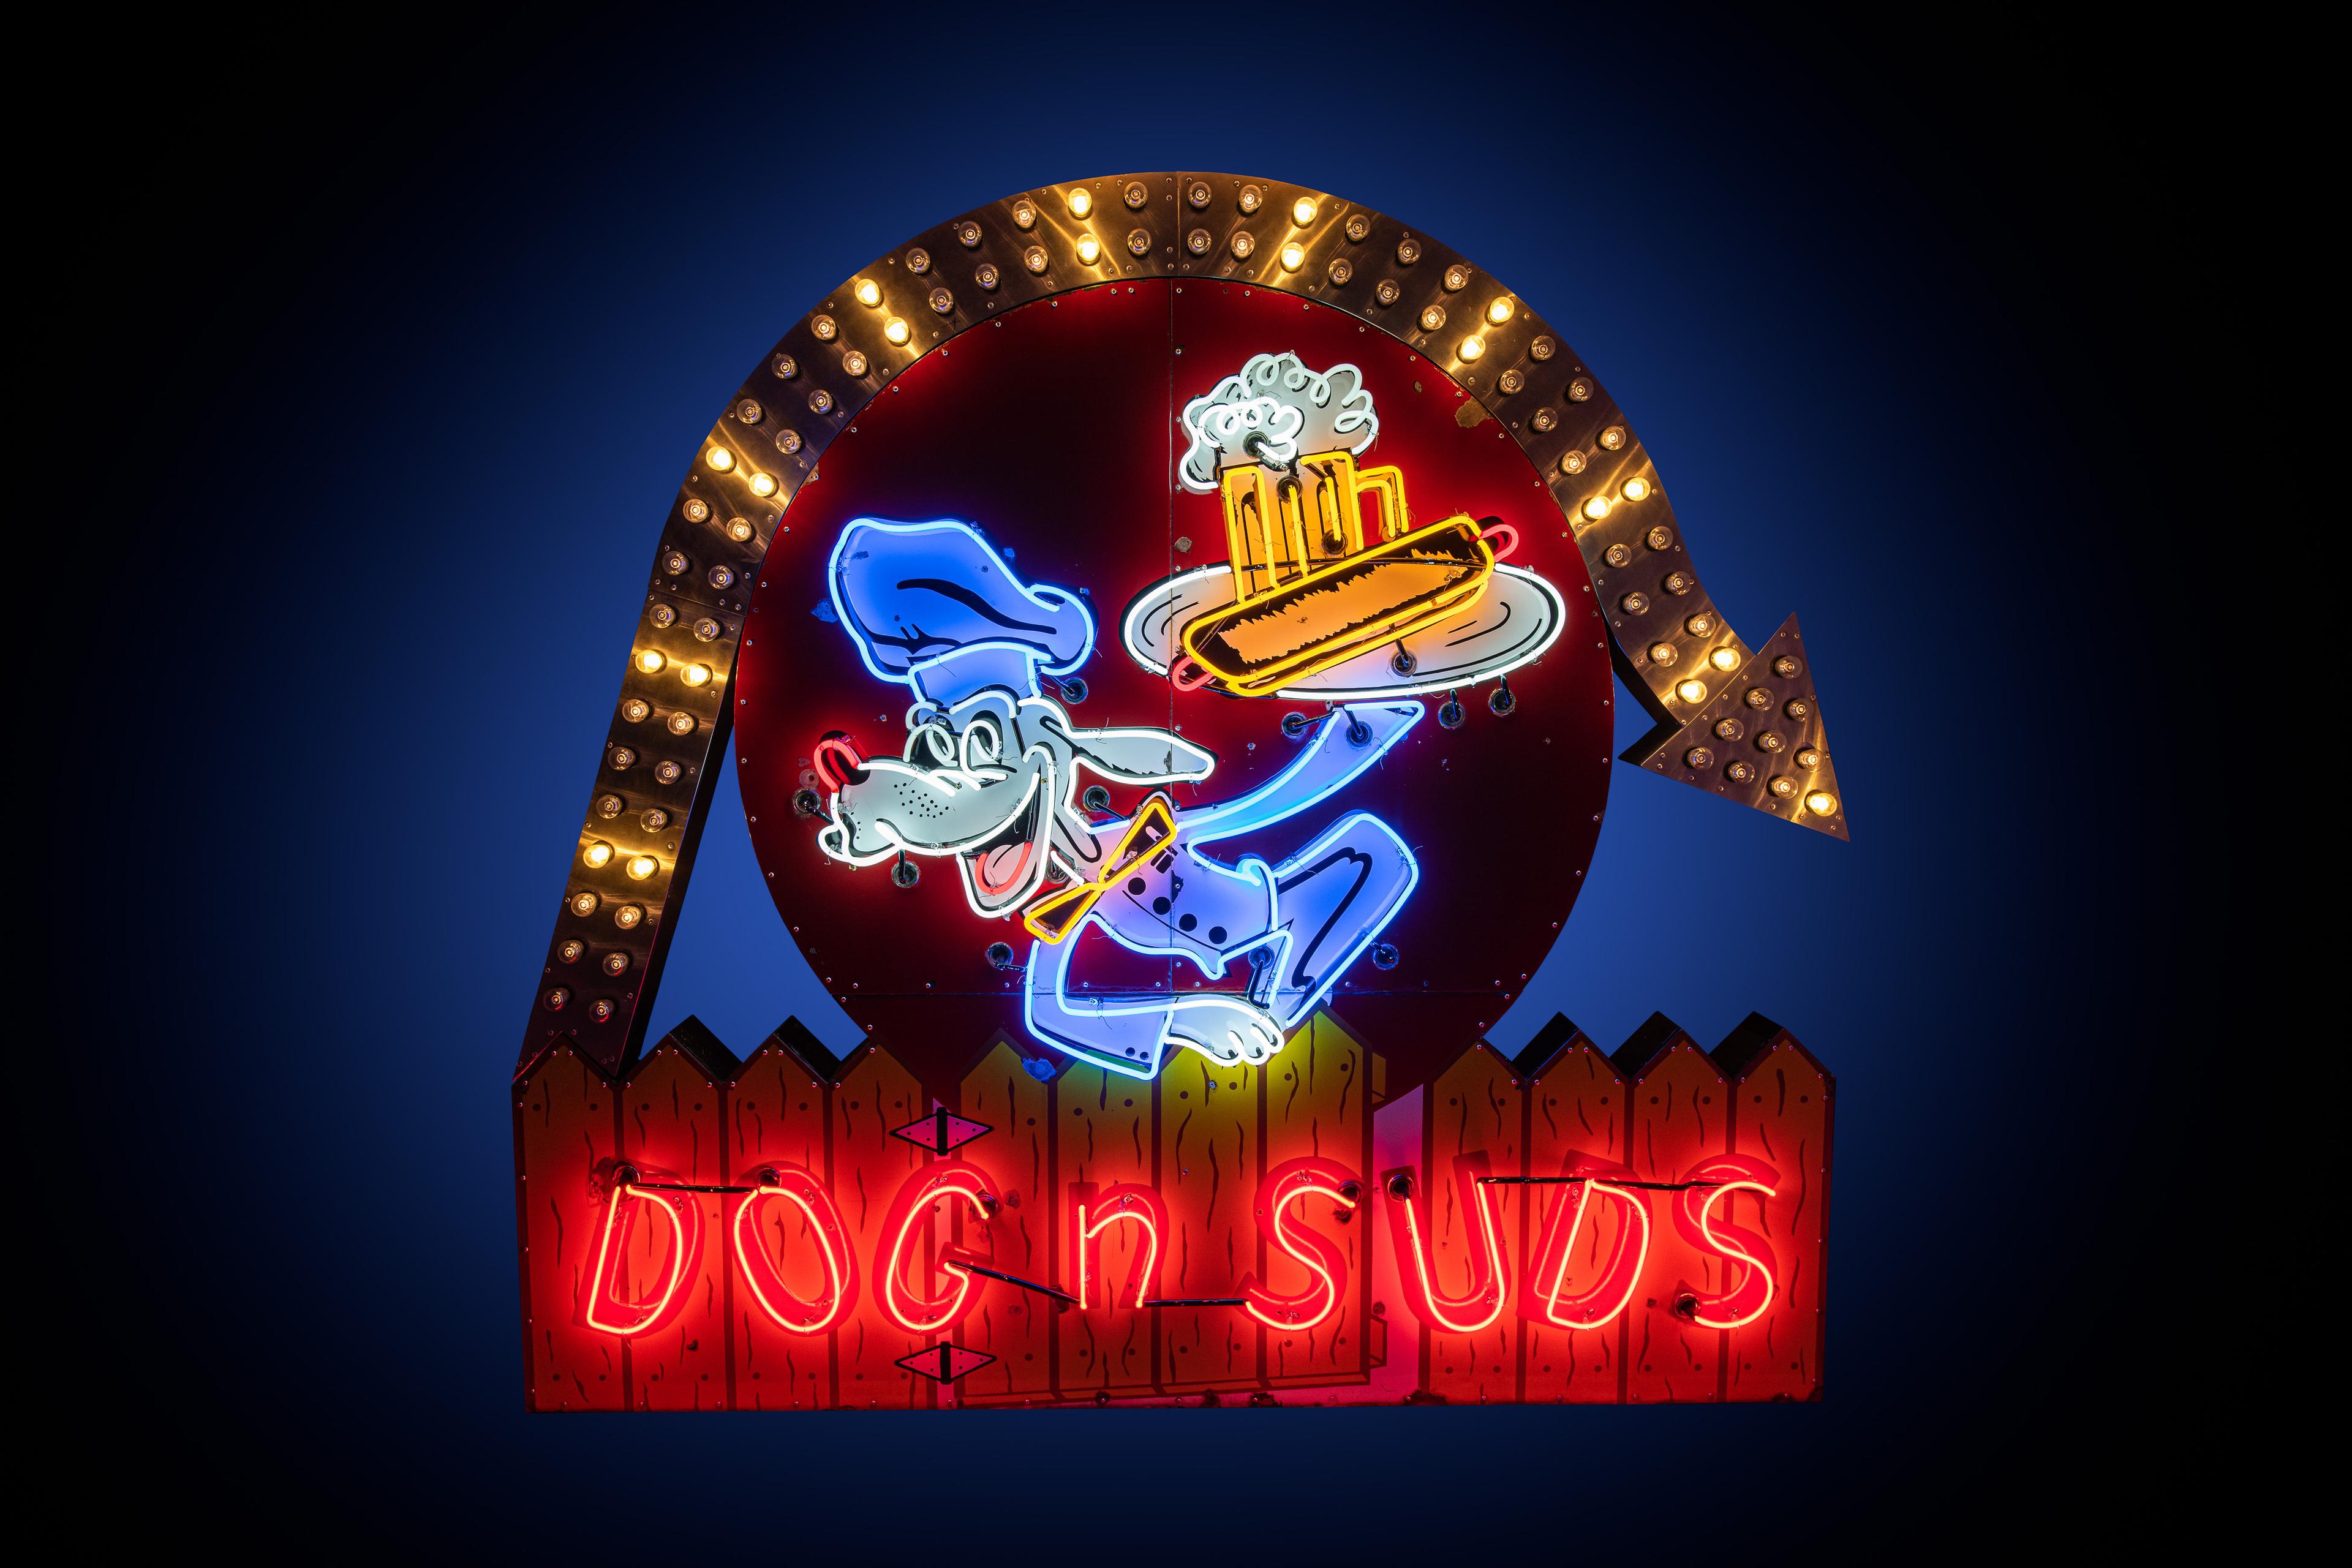 Dog N' Suds Sign